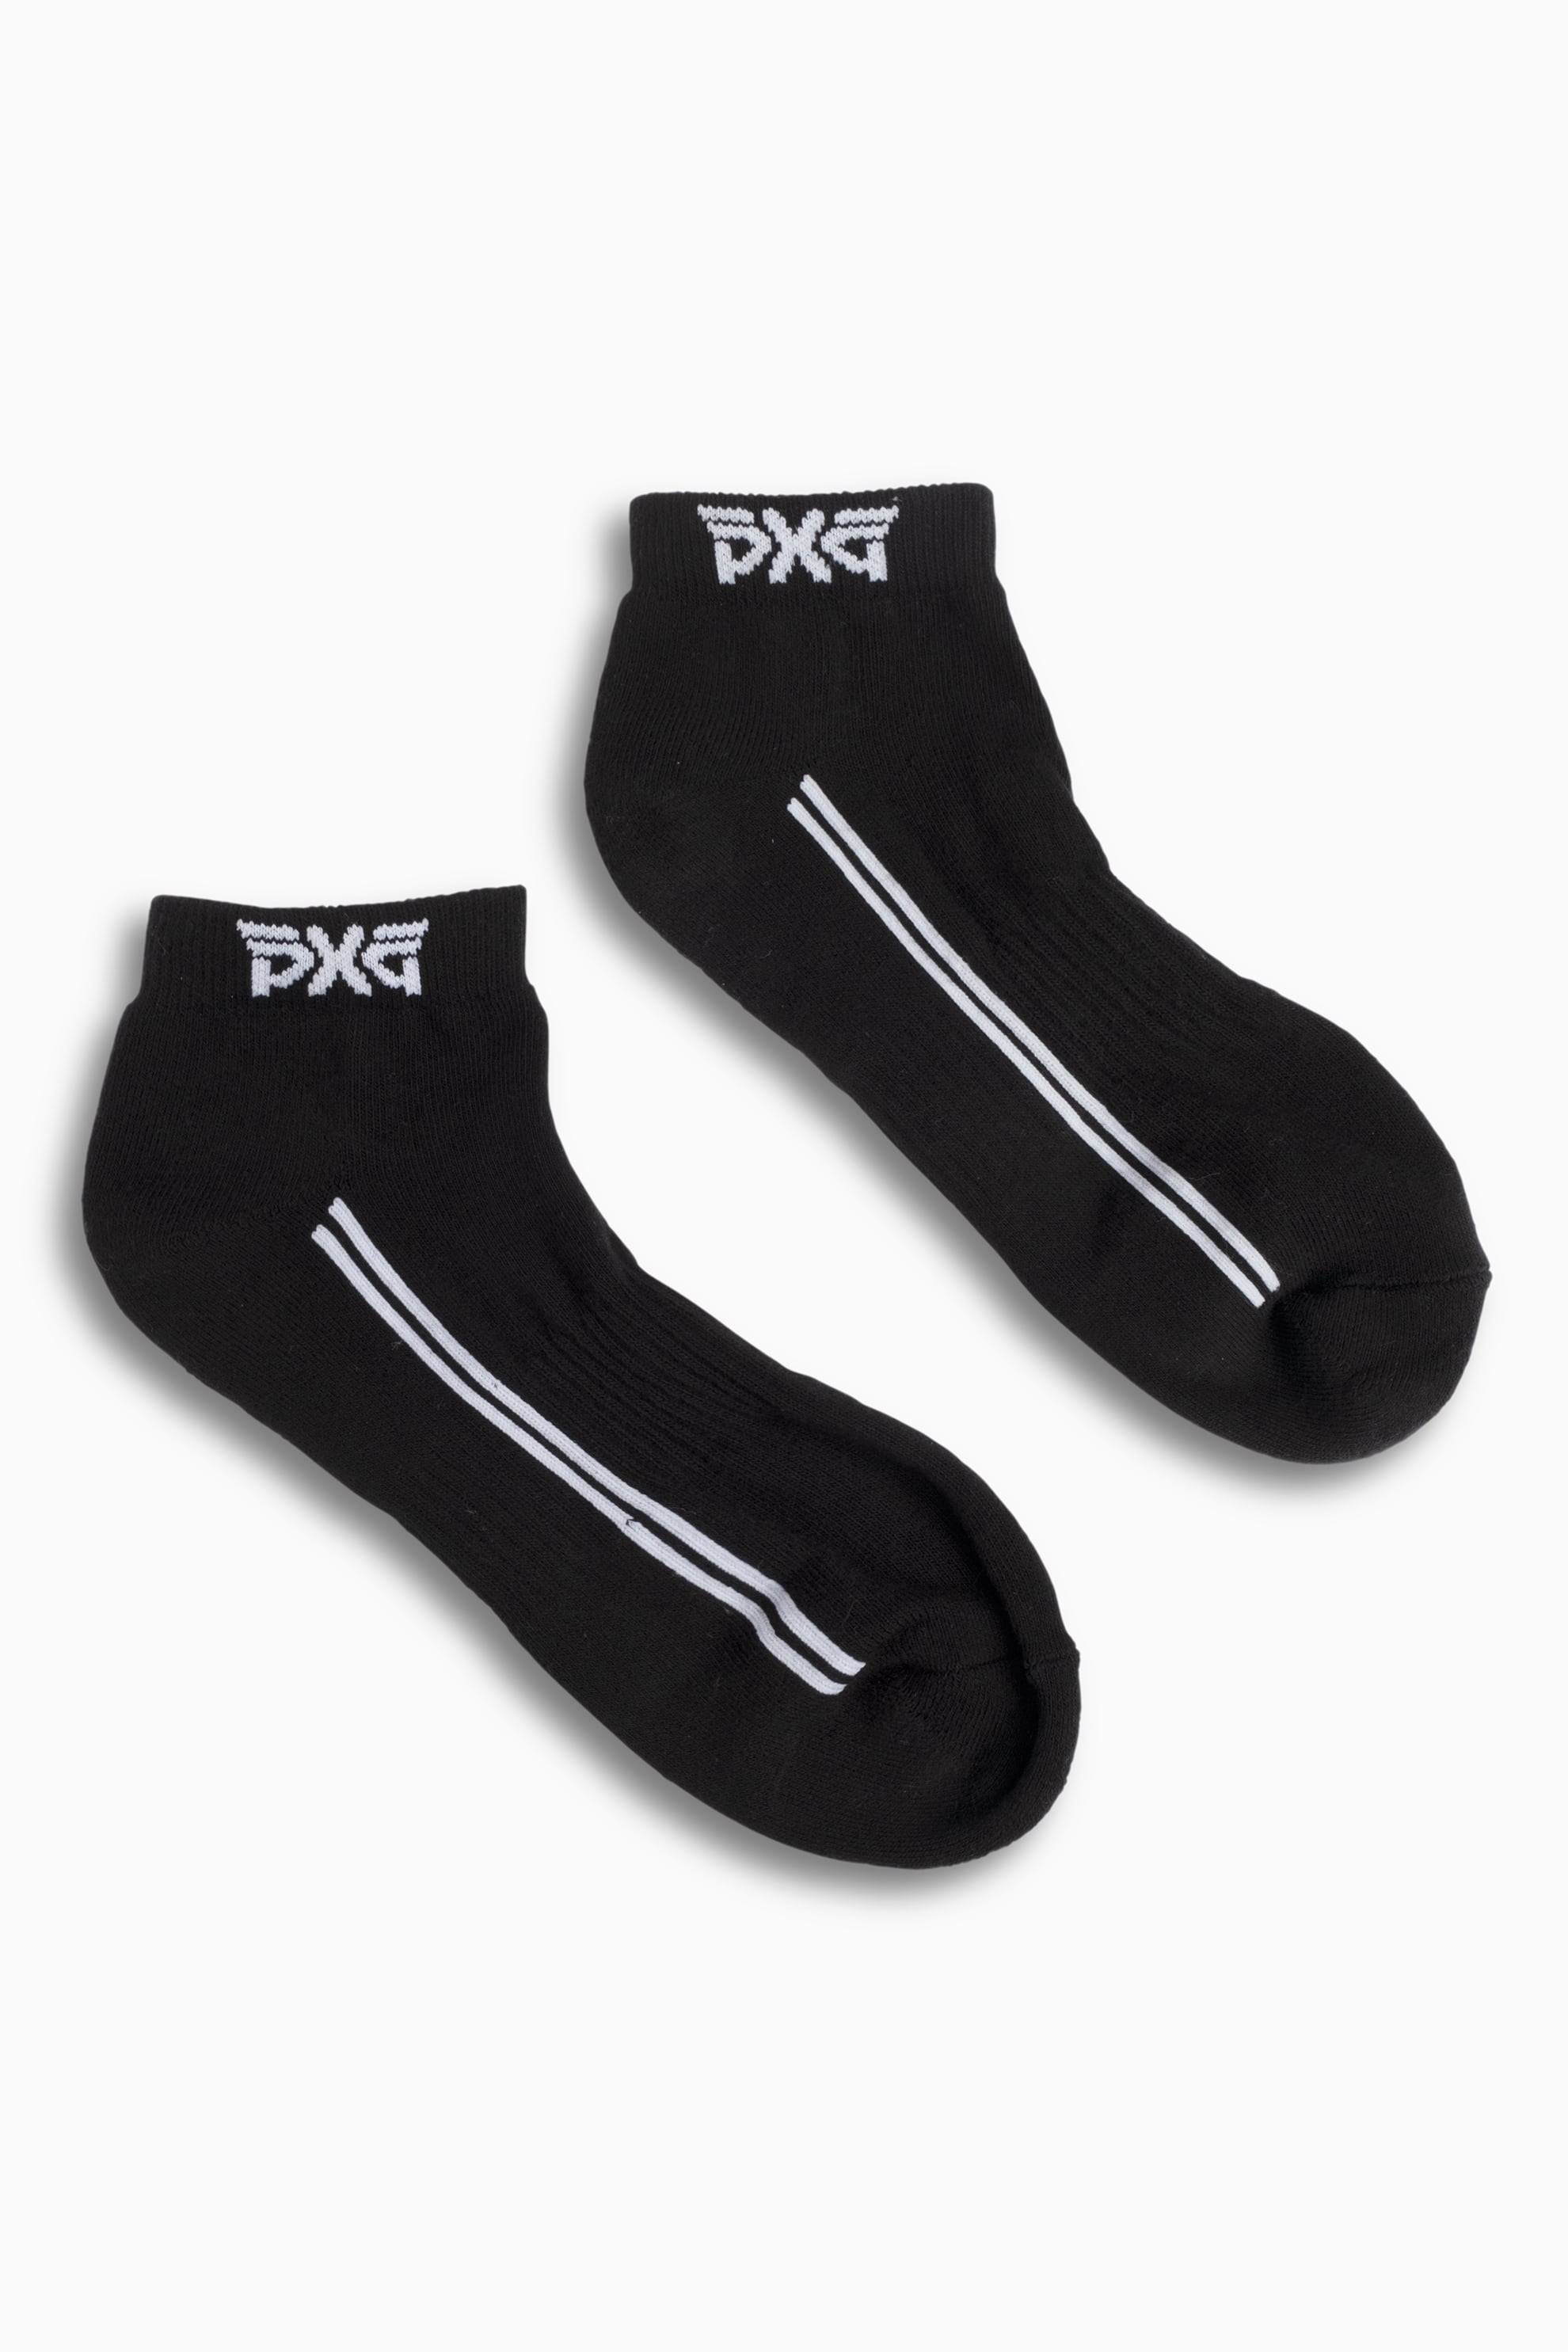 Women's Fashion Socks, Black Ankle Socks